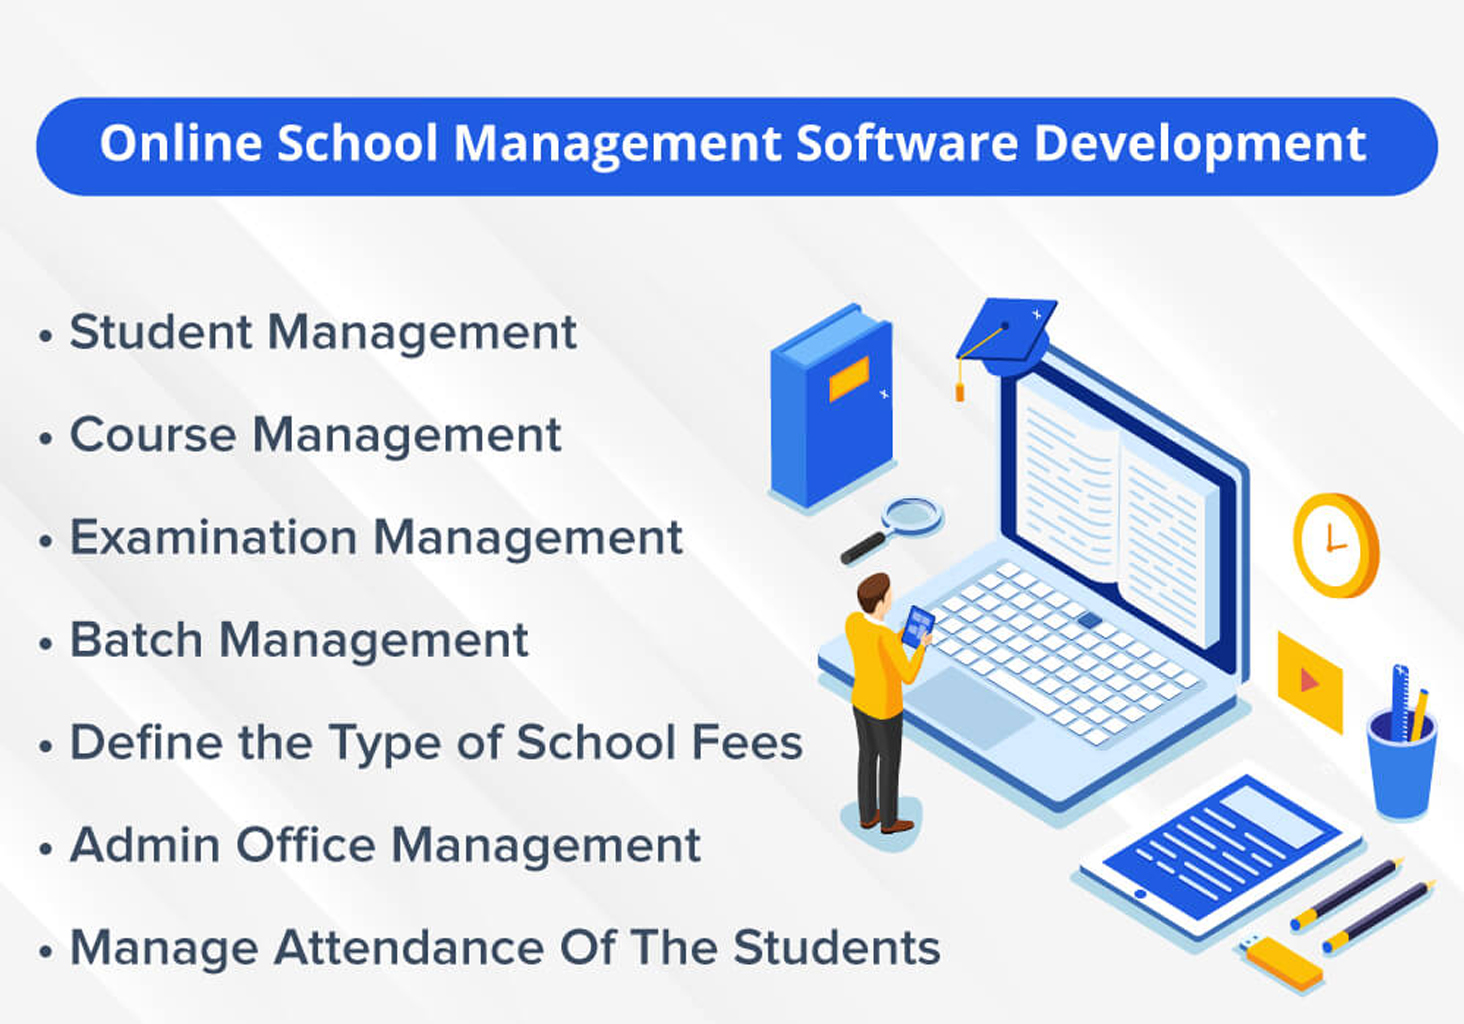 Online School Management Software